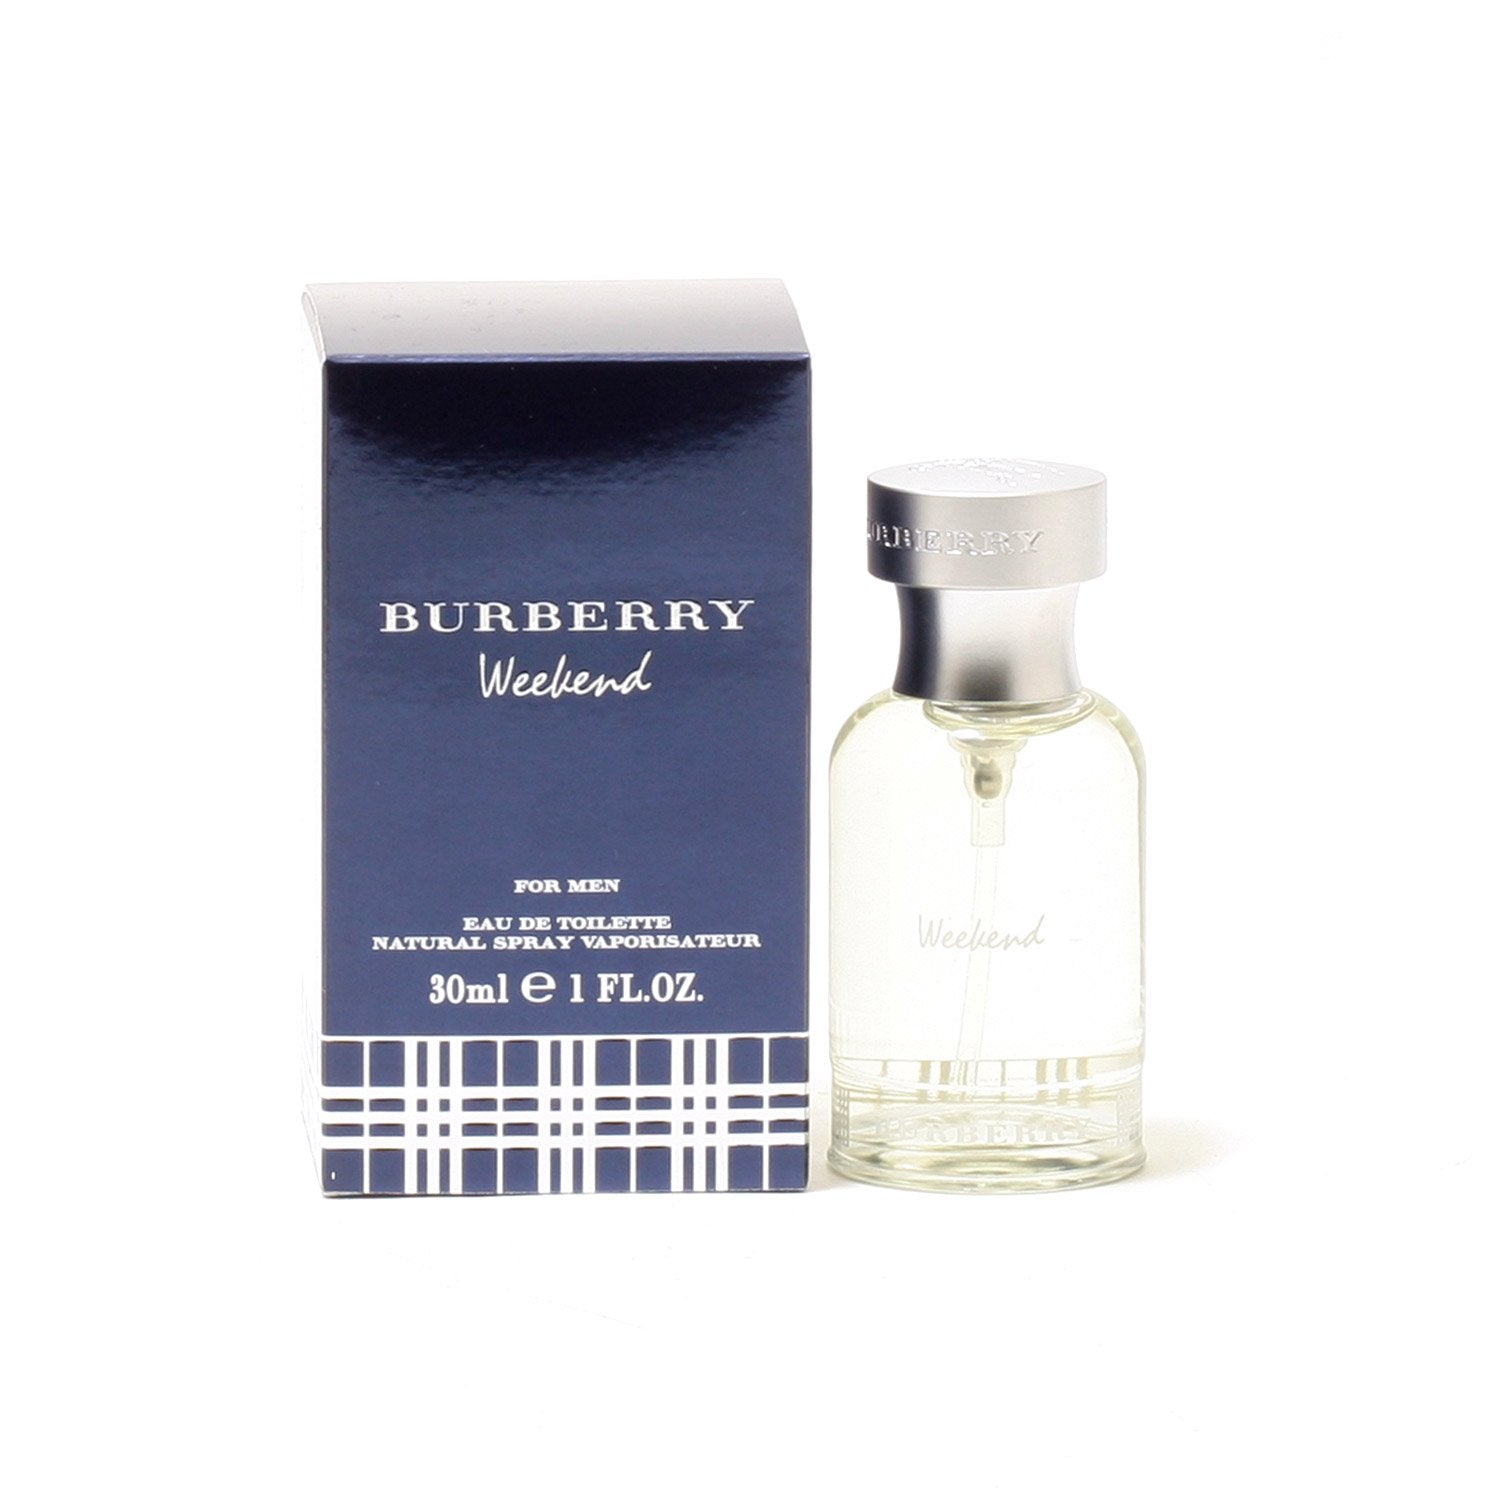 MEN – Fragrance EAU TOILETTE BURBERRY WEEKEND - DE SPRAY FOR Room